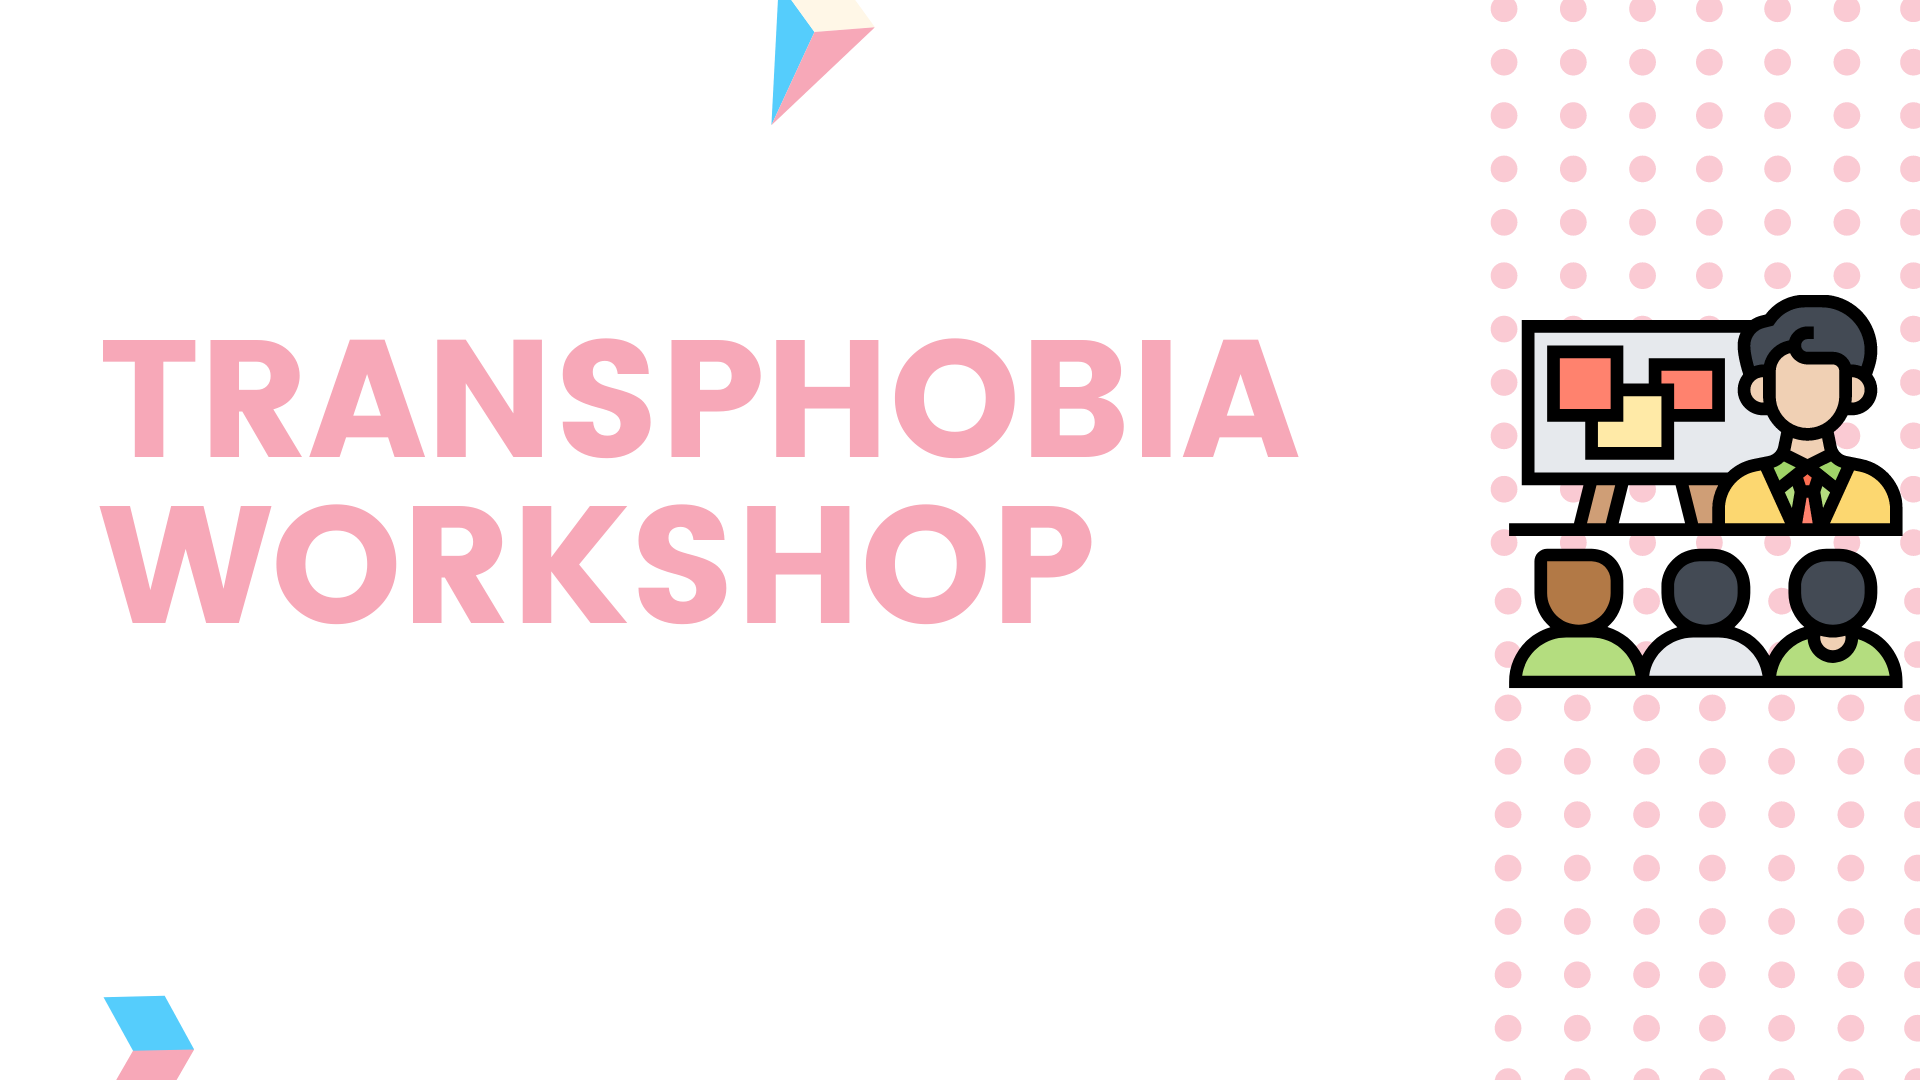 Transphobia workshop